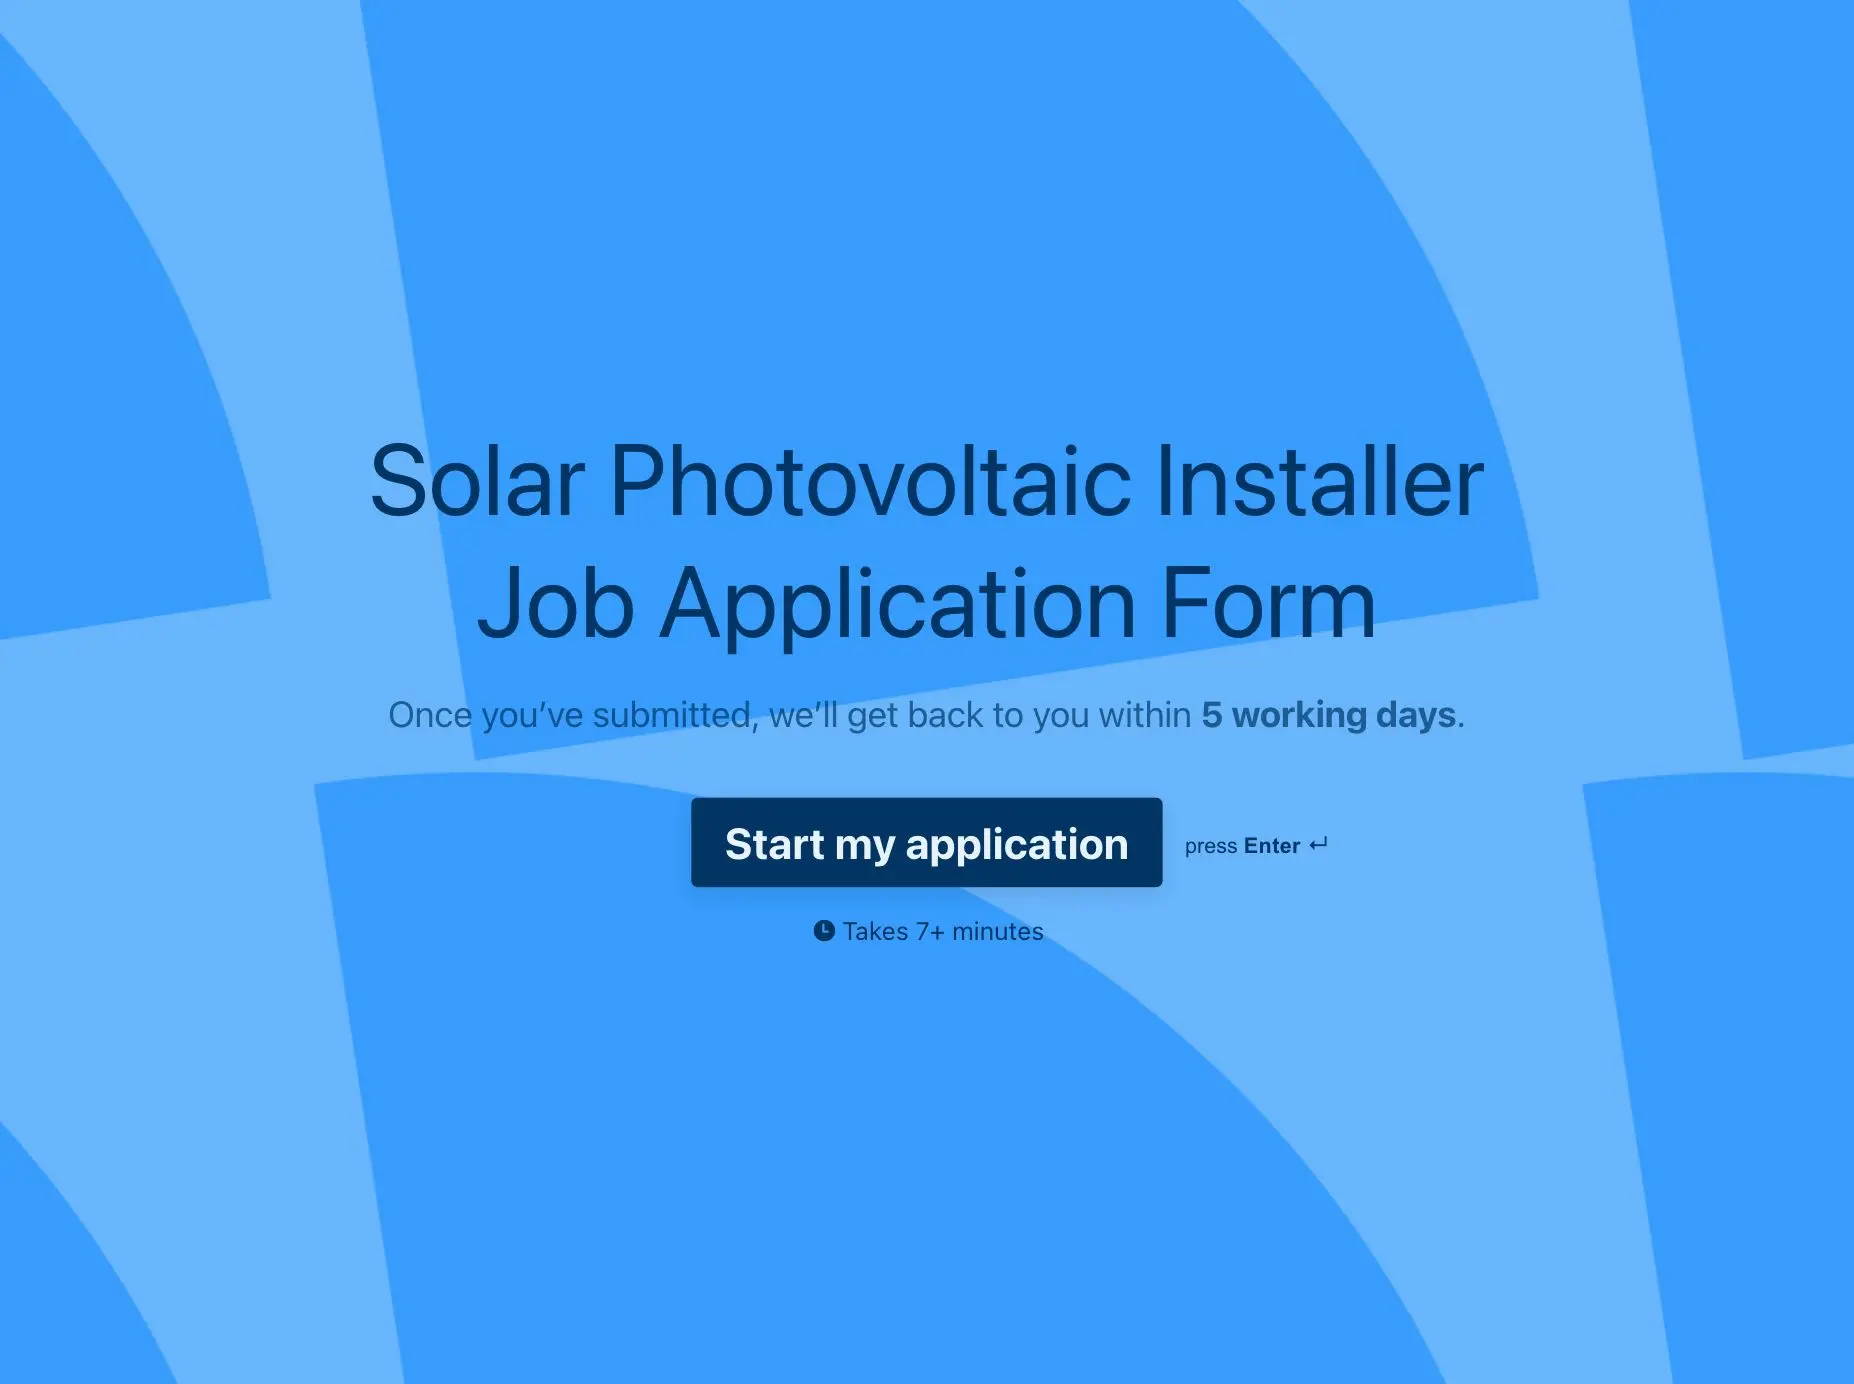 Solar Photovoltaic Installer Job Application Form Template Hero